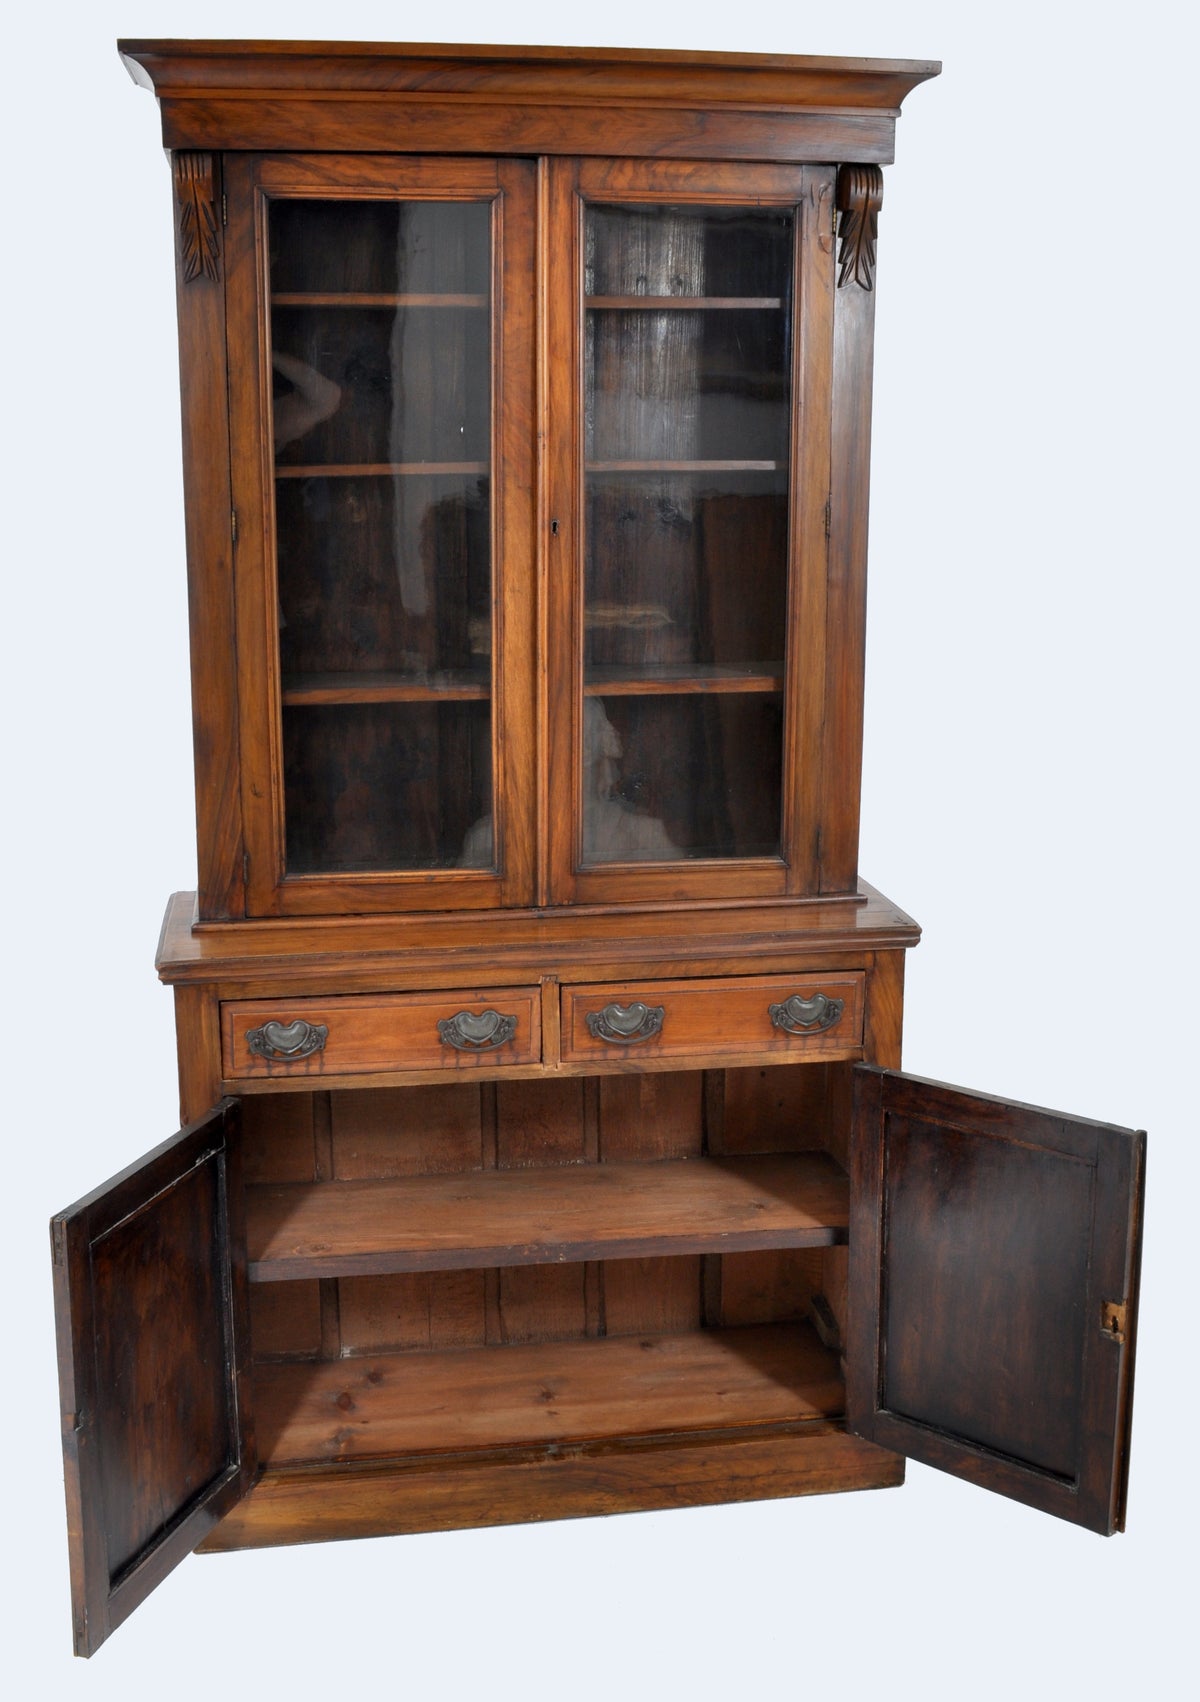 Antique English Aesthetic Movement Walnut Bookcase / Cabinet, circa 1880